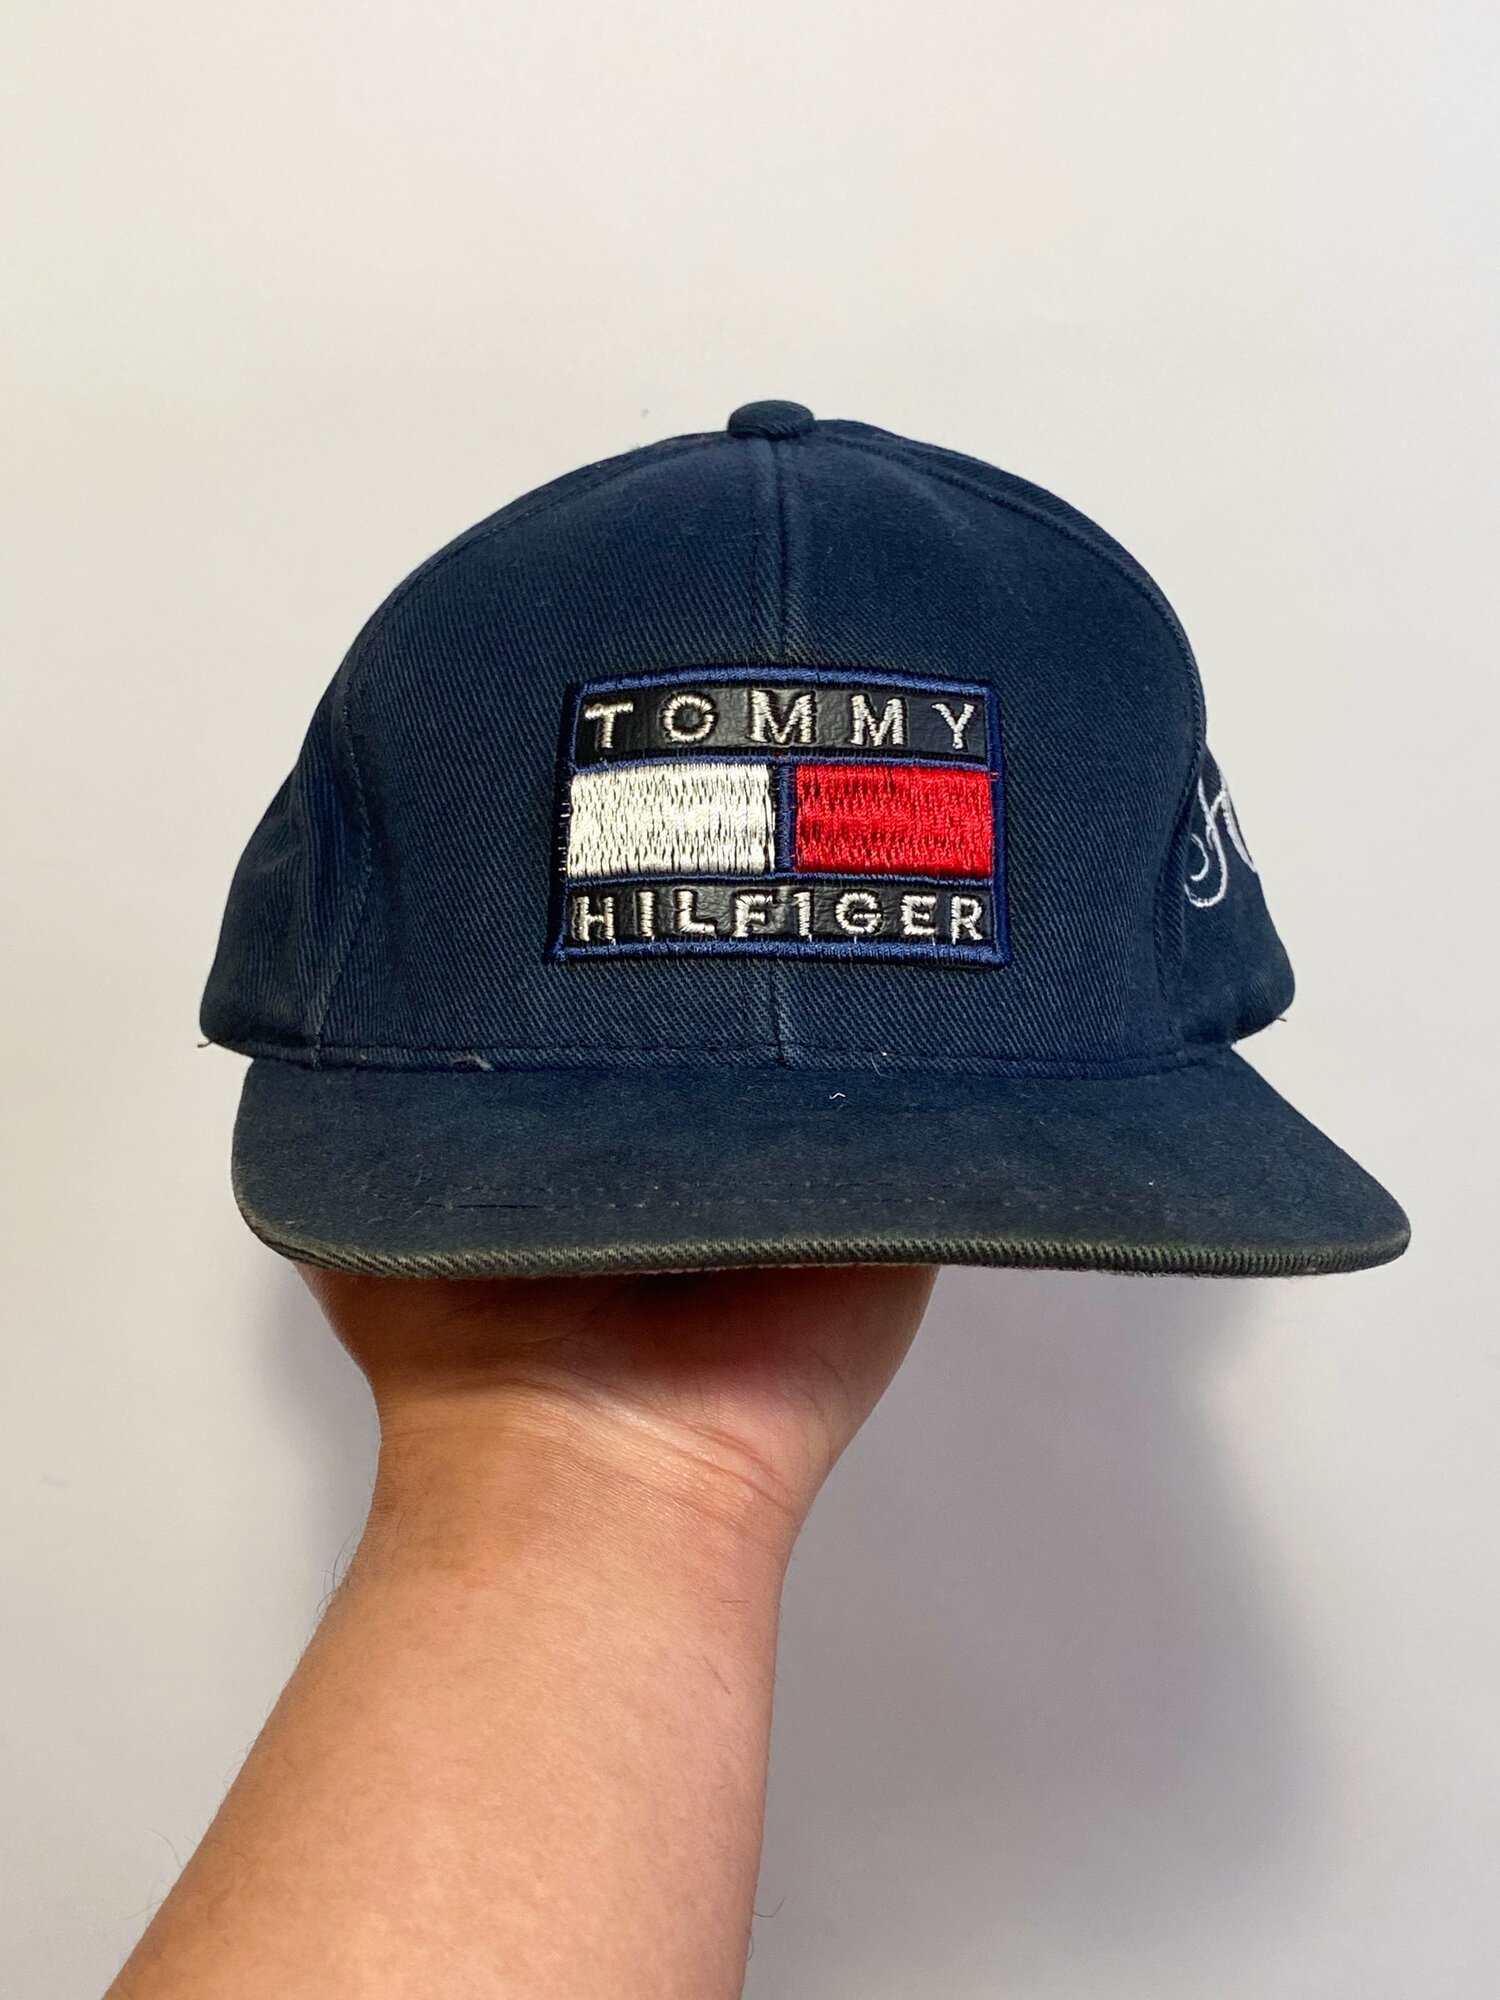 Hilfiger thrift wind — Hat second Bootleg Embroidered Tommy Logo